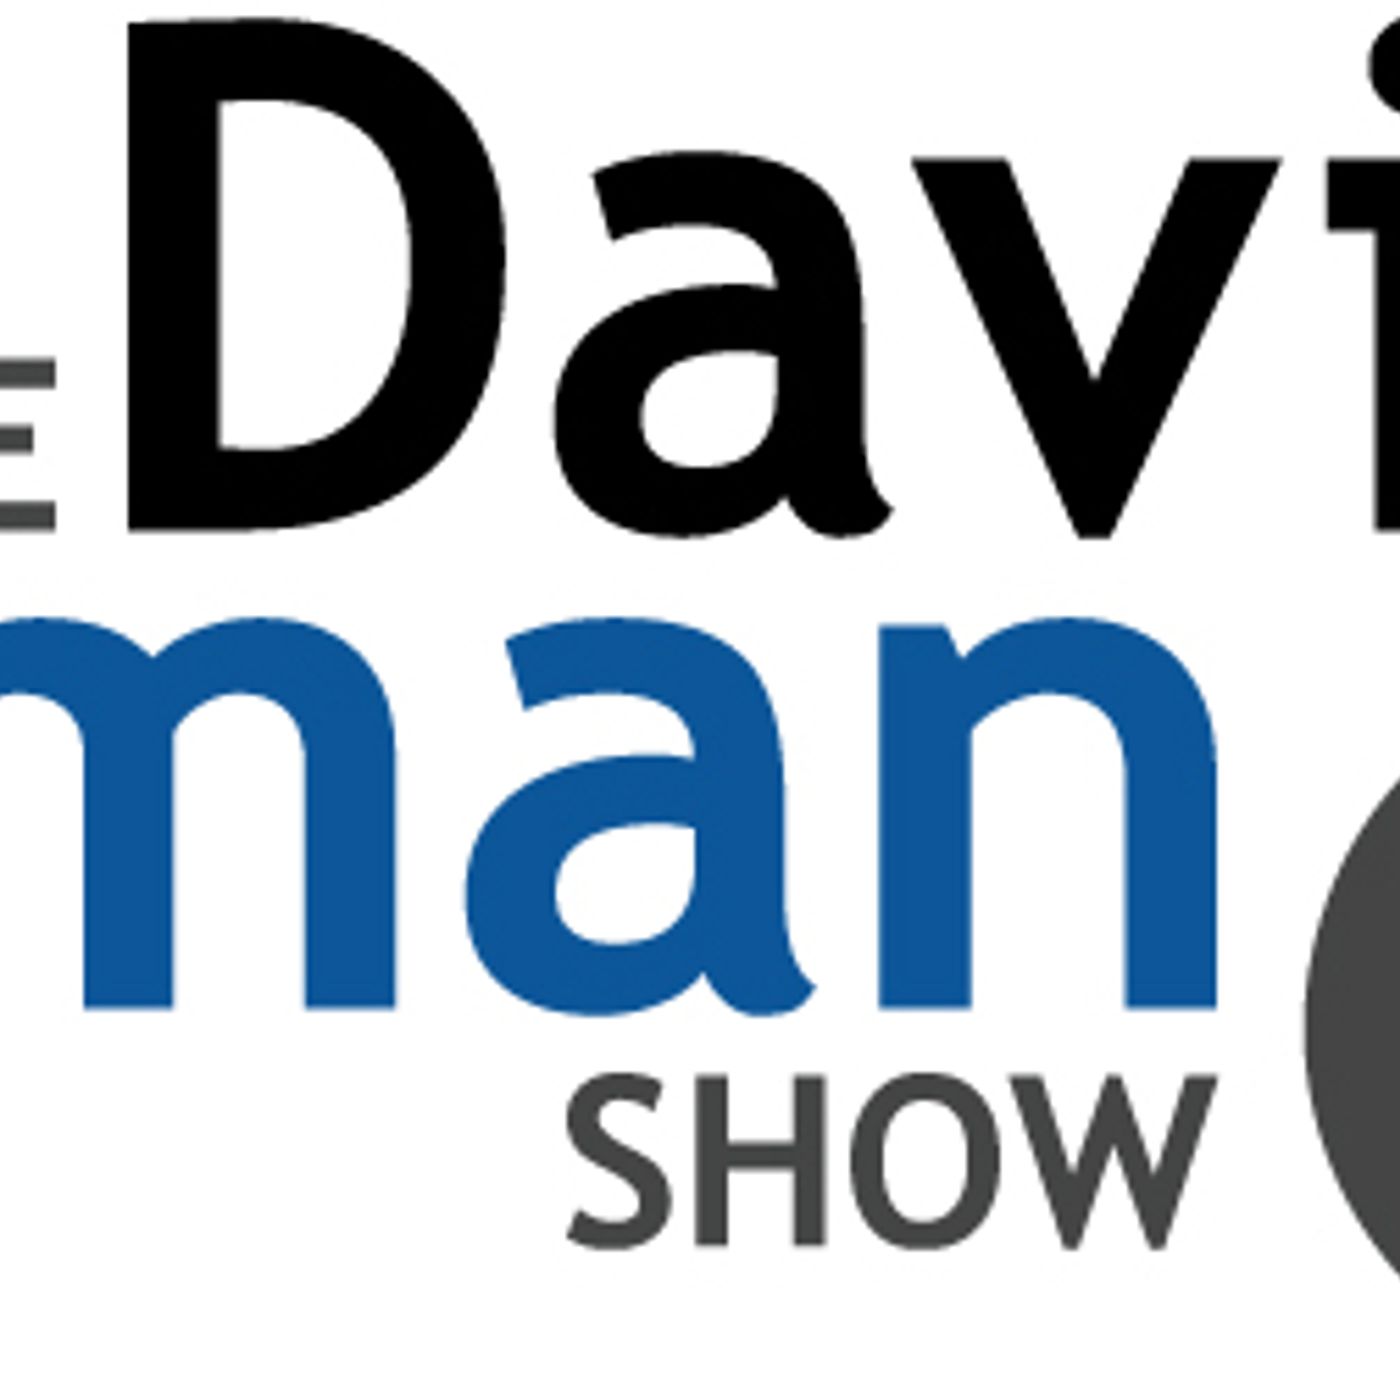 The David Pakman Show